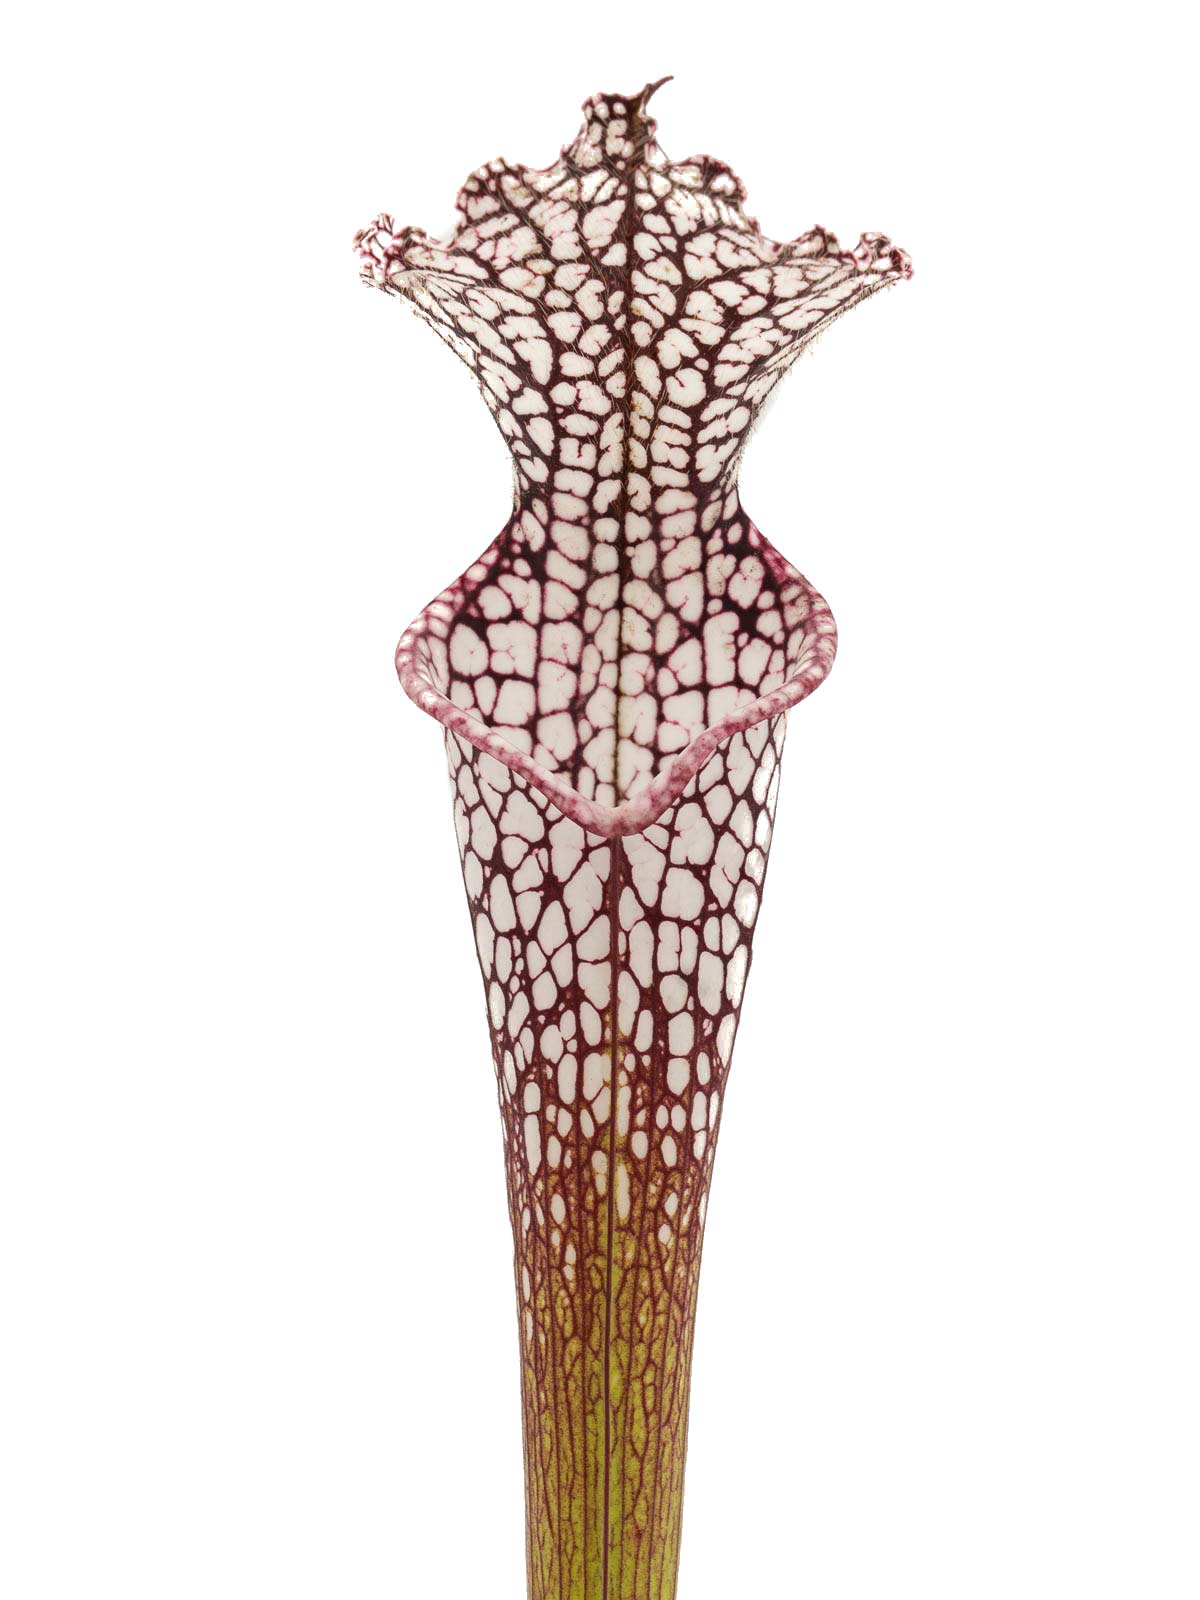 Sarracenia leucophylla - MK L19, giant form, Route 71, near Altha, Calhoun County, Florida